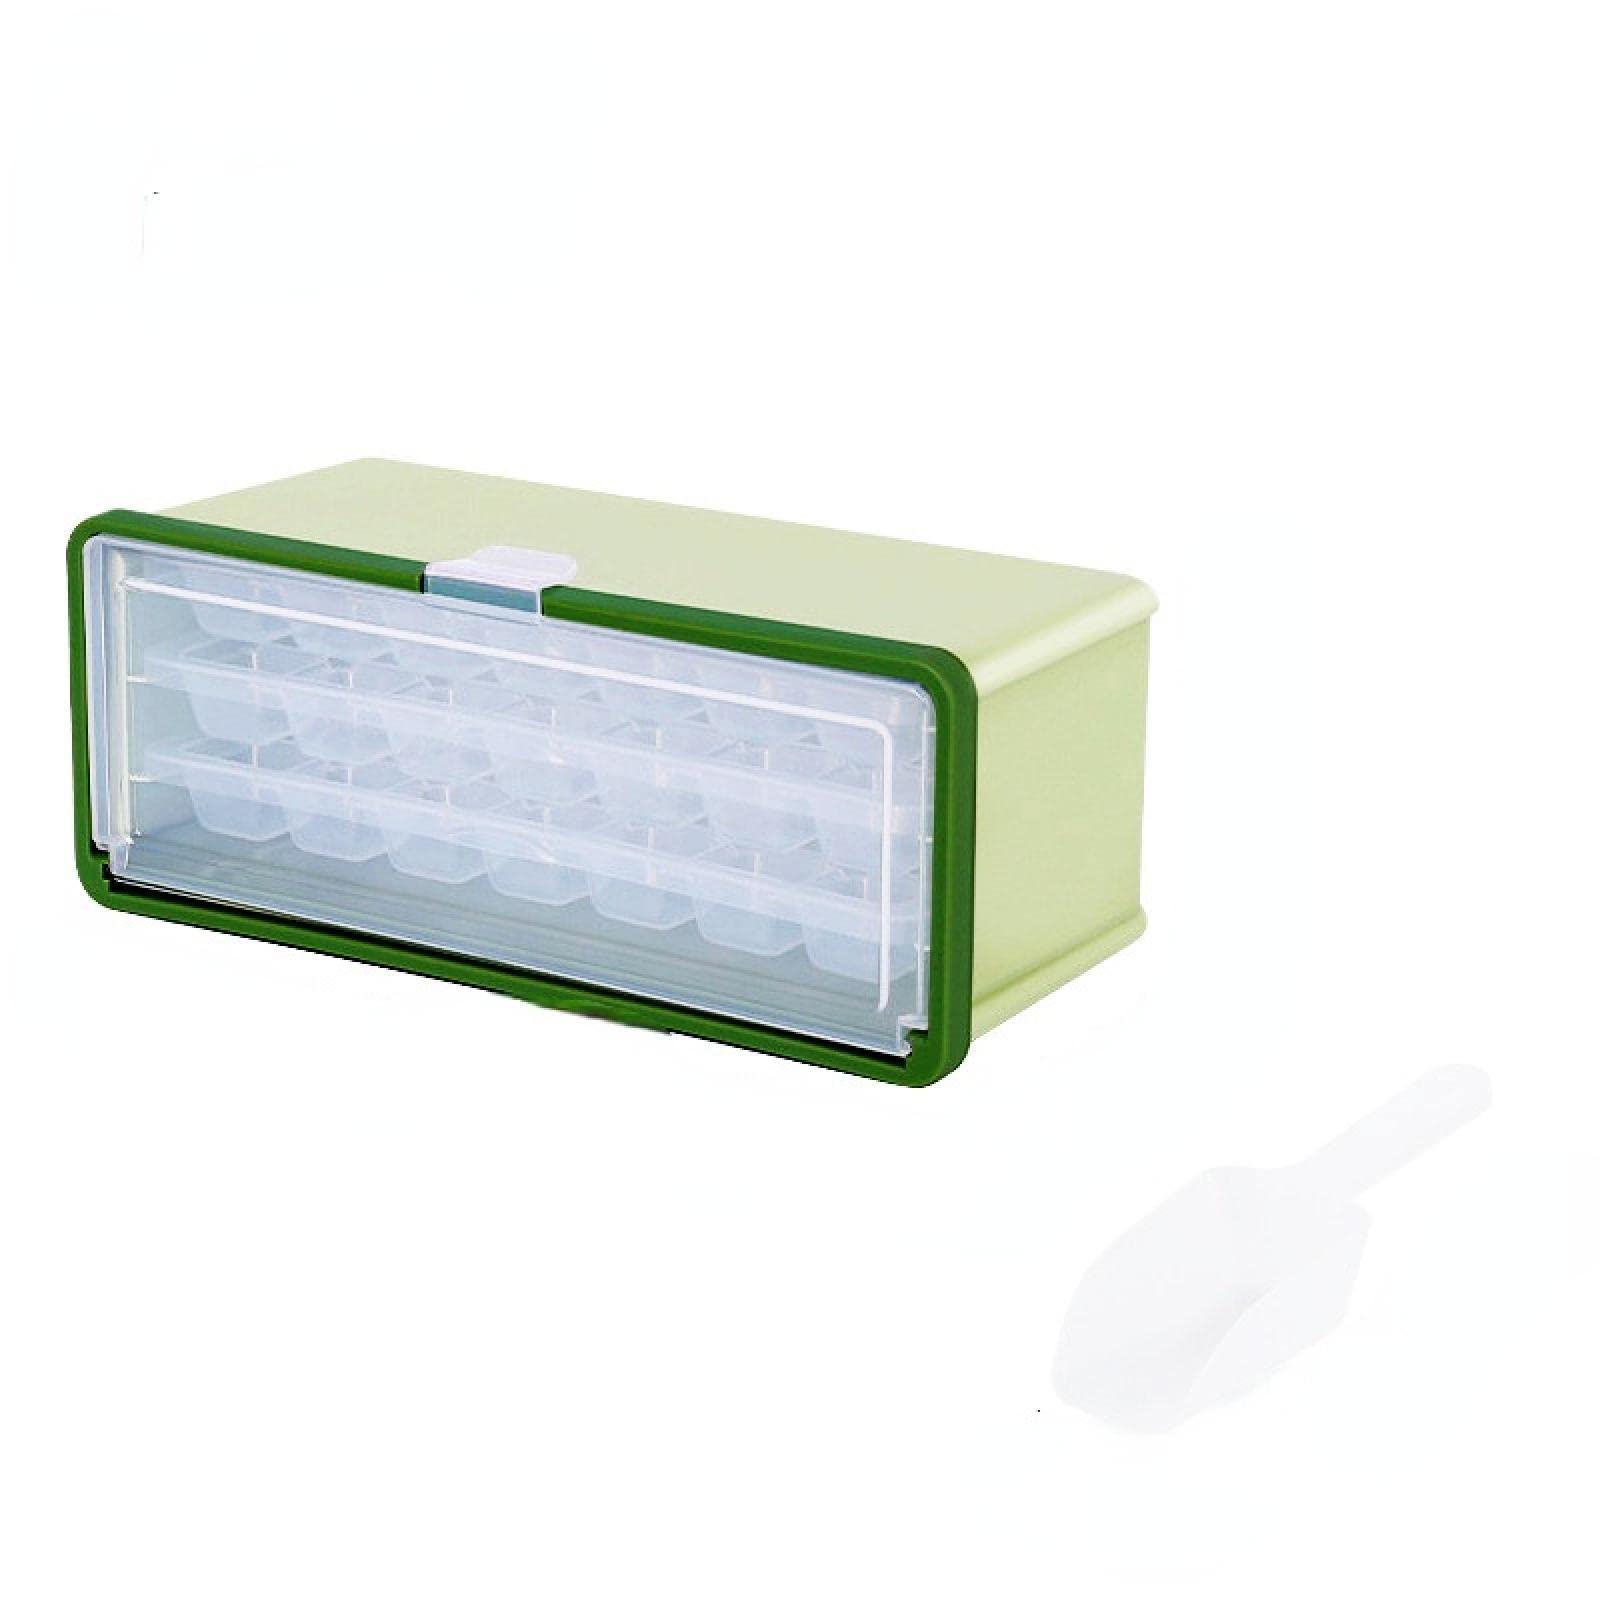 NA Household Refrigerator self-Made ice Lattice Summer Honeycomb ice Maker Double-Layer Silica Gel ice Mold ice Box Storage LightGreen:thirdfloor